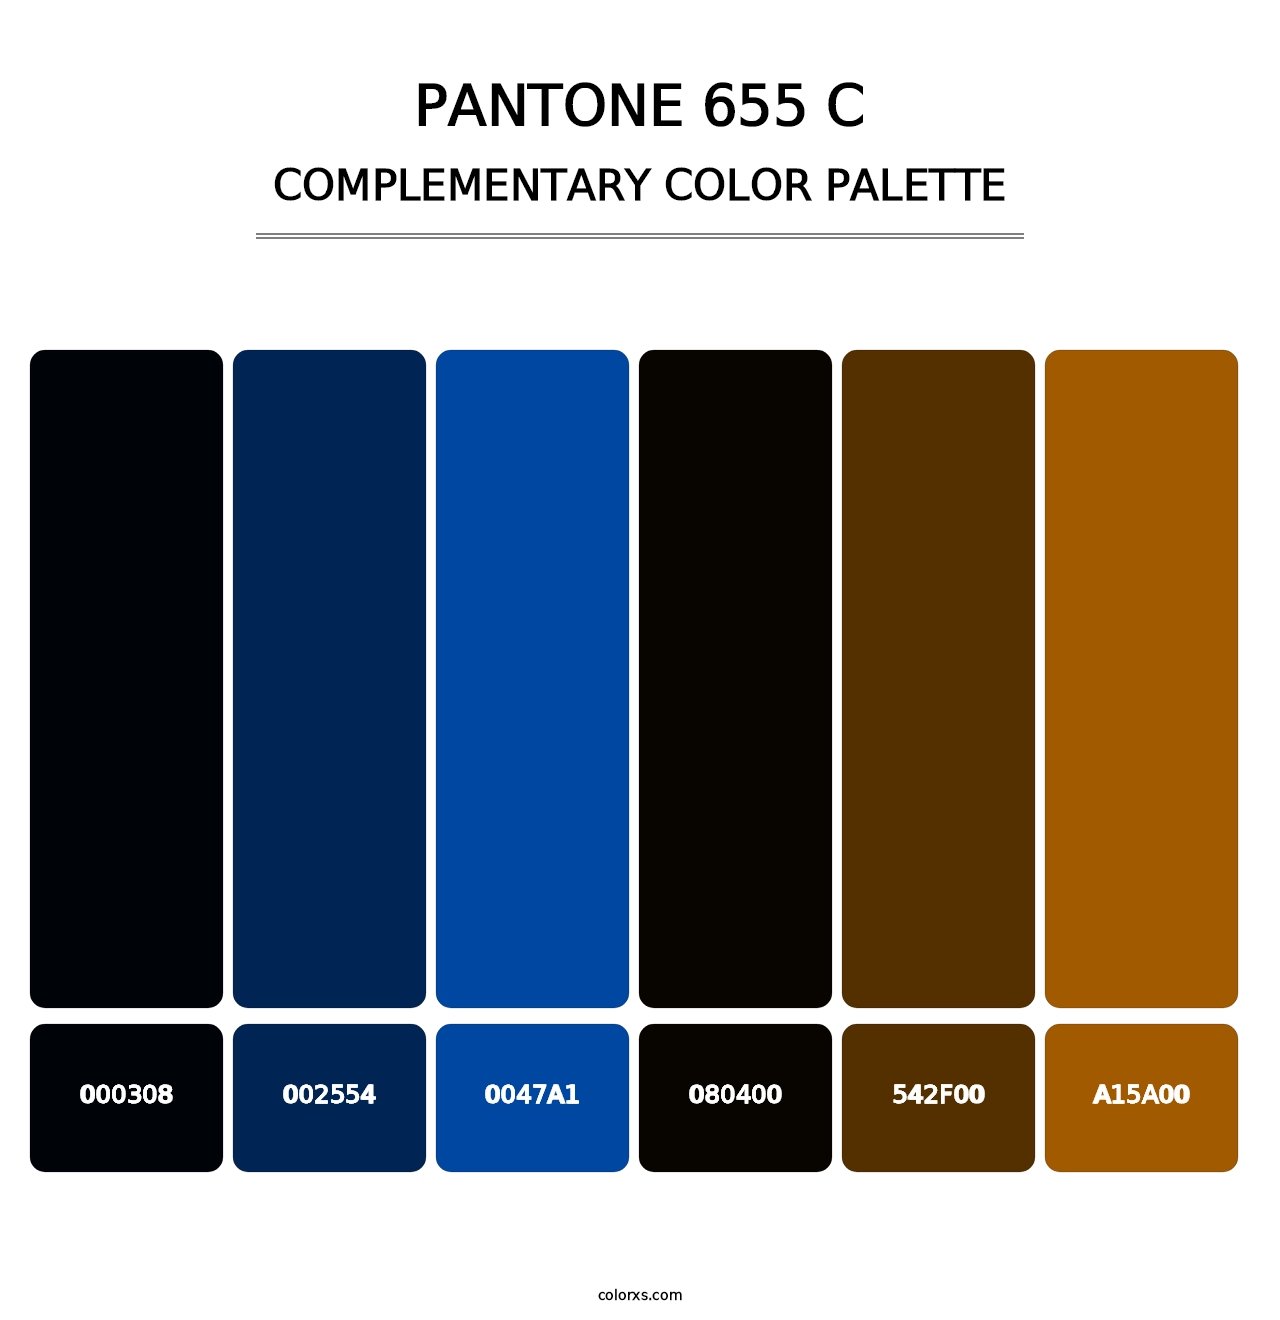 PANTONE 655 C - Complementary Color Palette